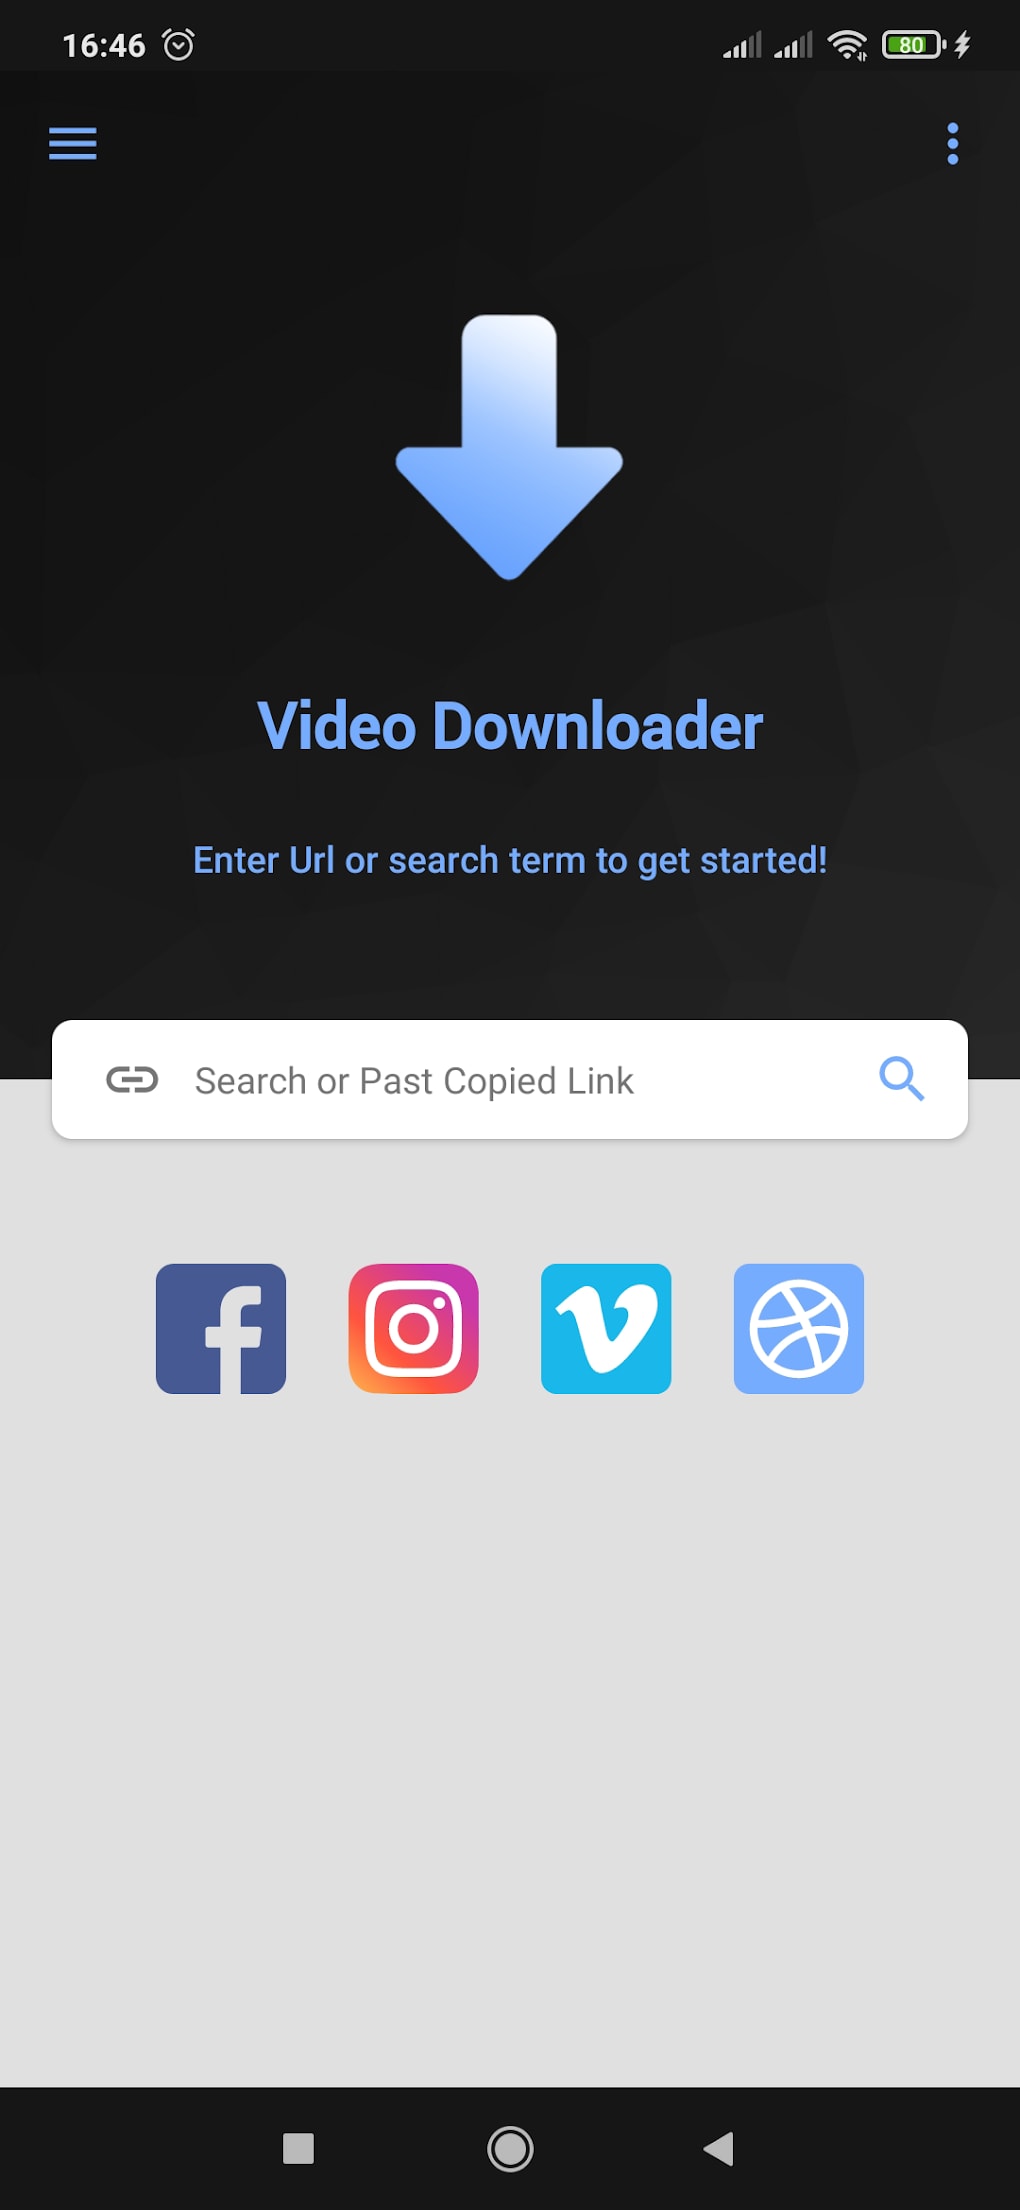 bob vlad recommends xvideo video downloader apk pic